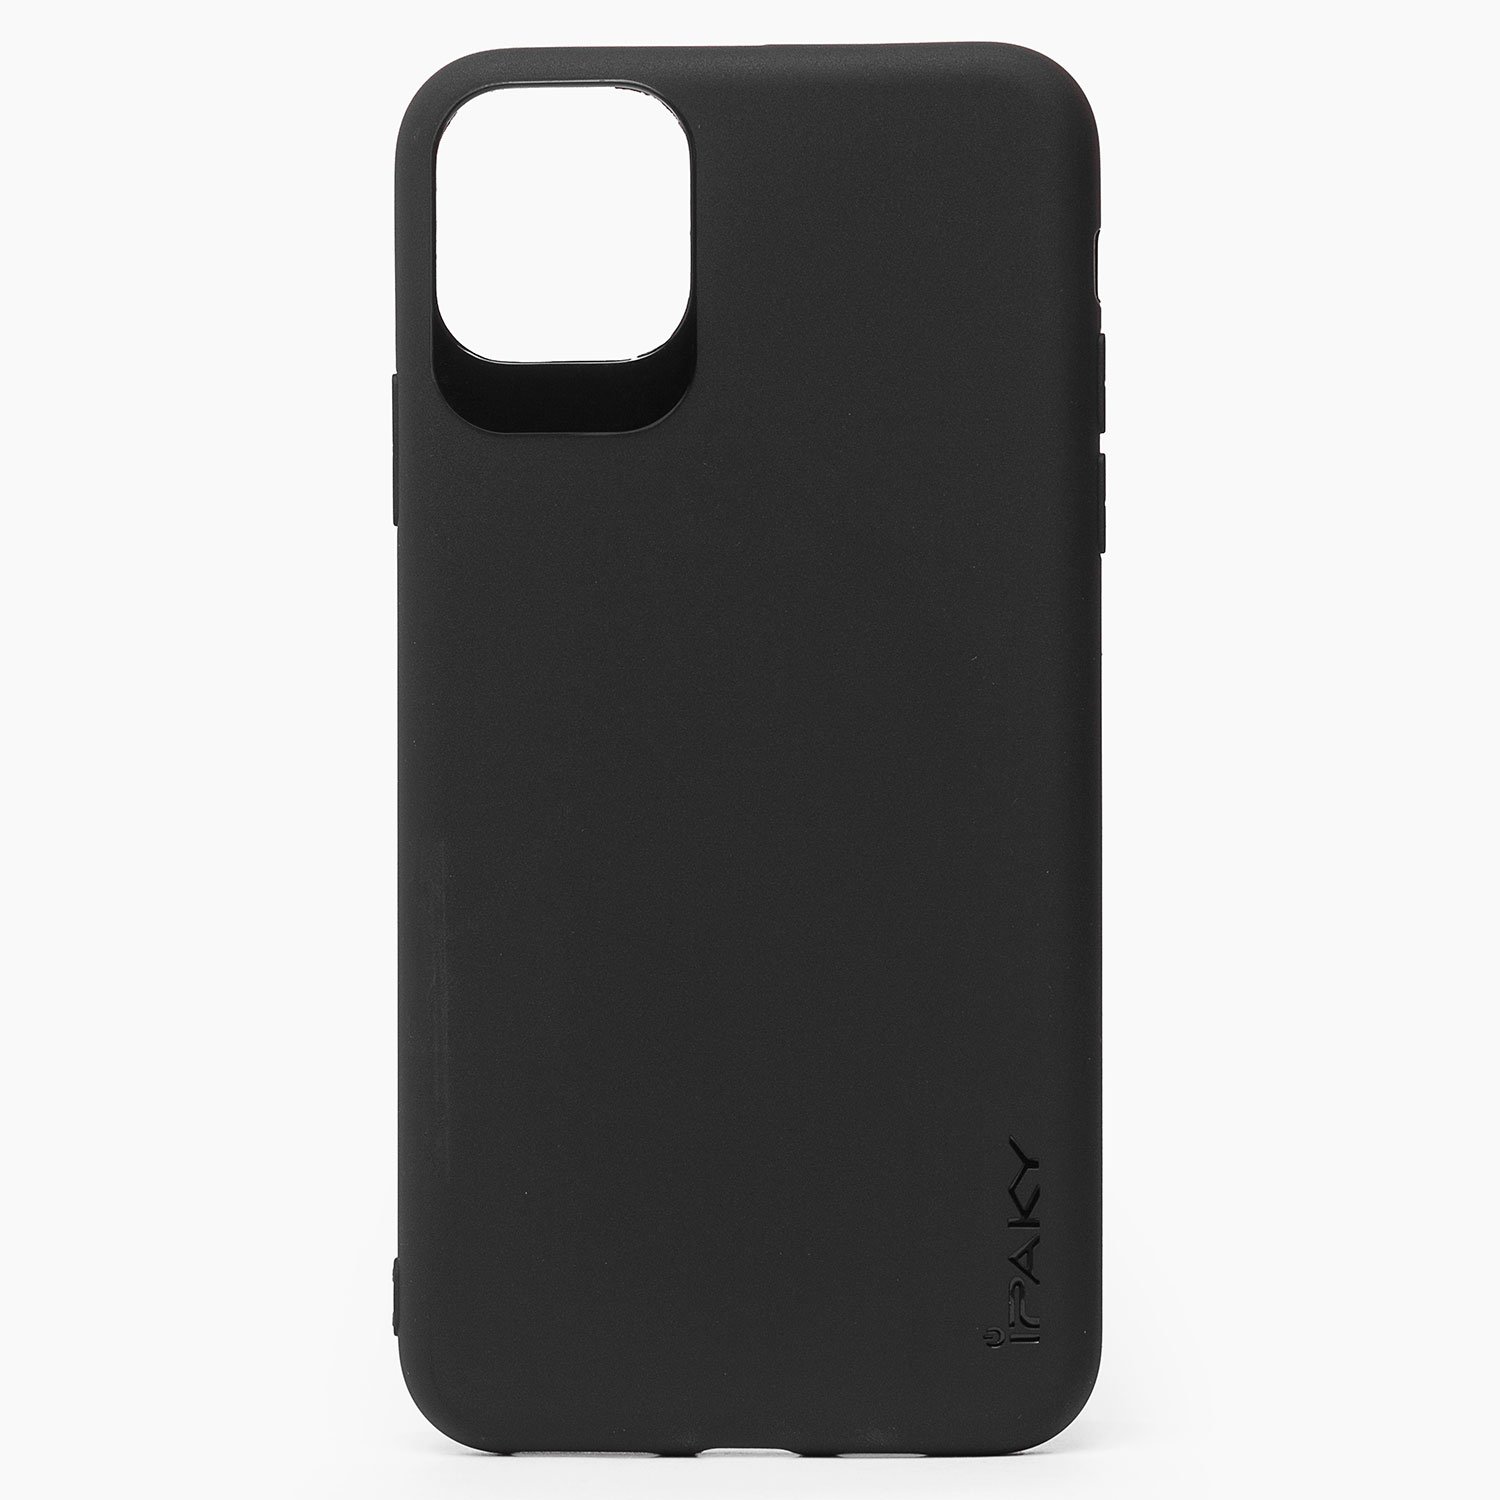 Чехол-накладка iPAKY SC178 для смартфона Apple iPhone 11 Pro Max, силикон, черный (113970)